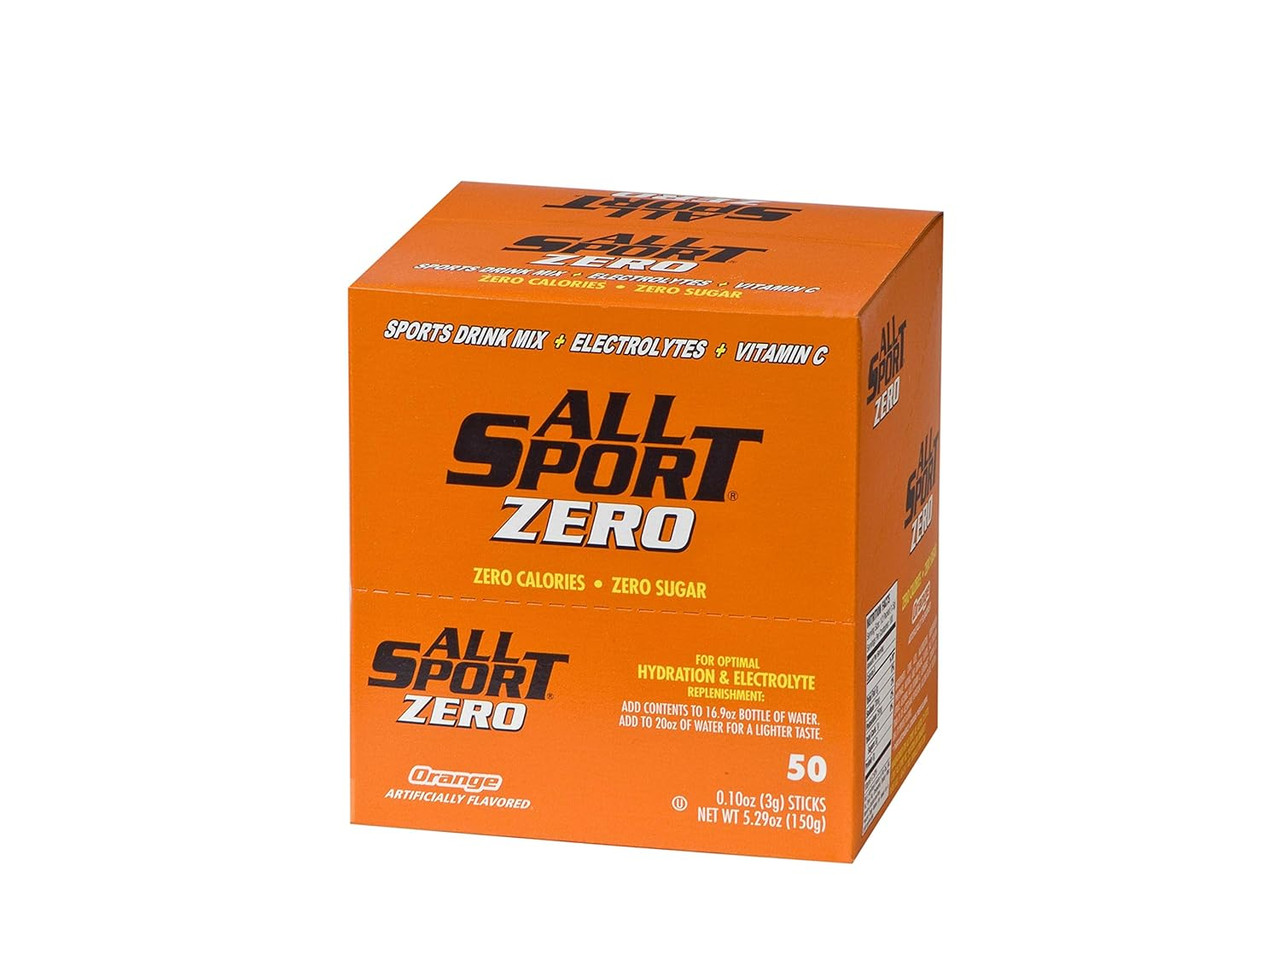 All Sport (Orange) Powder Hydration Stick, Performance Electrolyte Drink Mix, Sugar Free, 2x Potassium, 50 Count